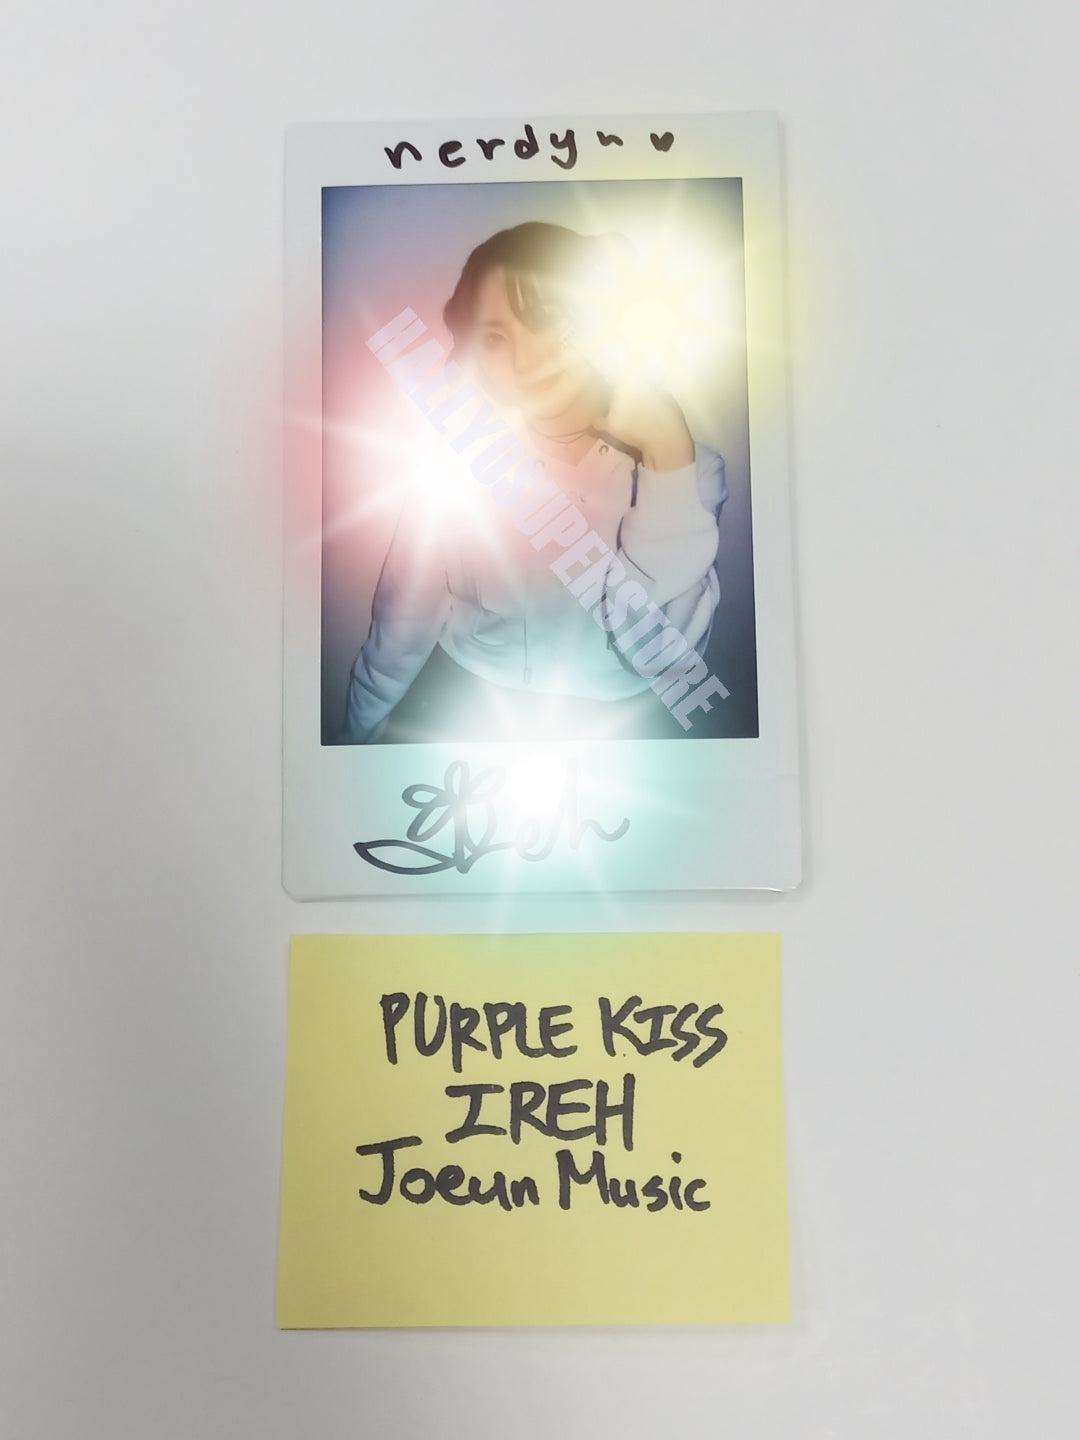 IREH (of Purple Kiss) 4th mini – Hand Autographed(Signed) Polaroid